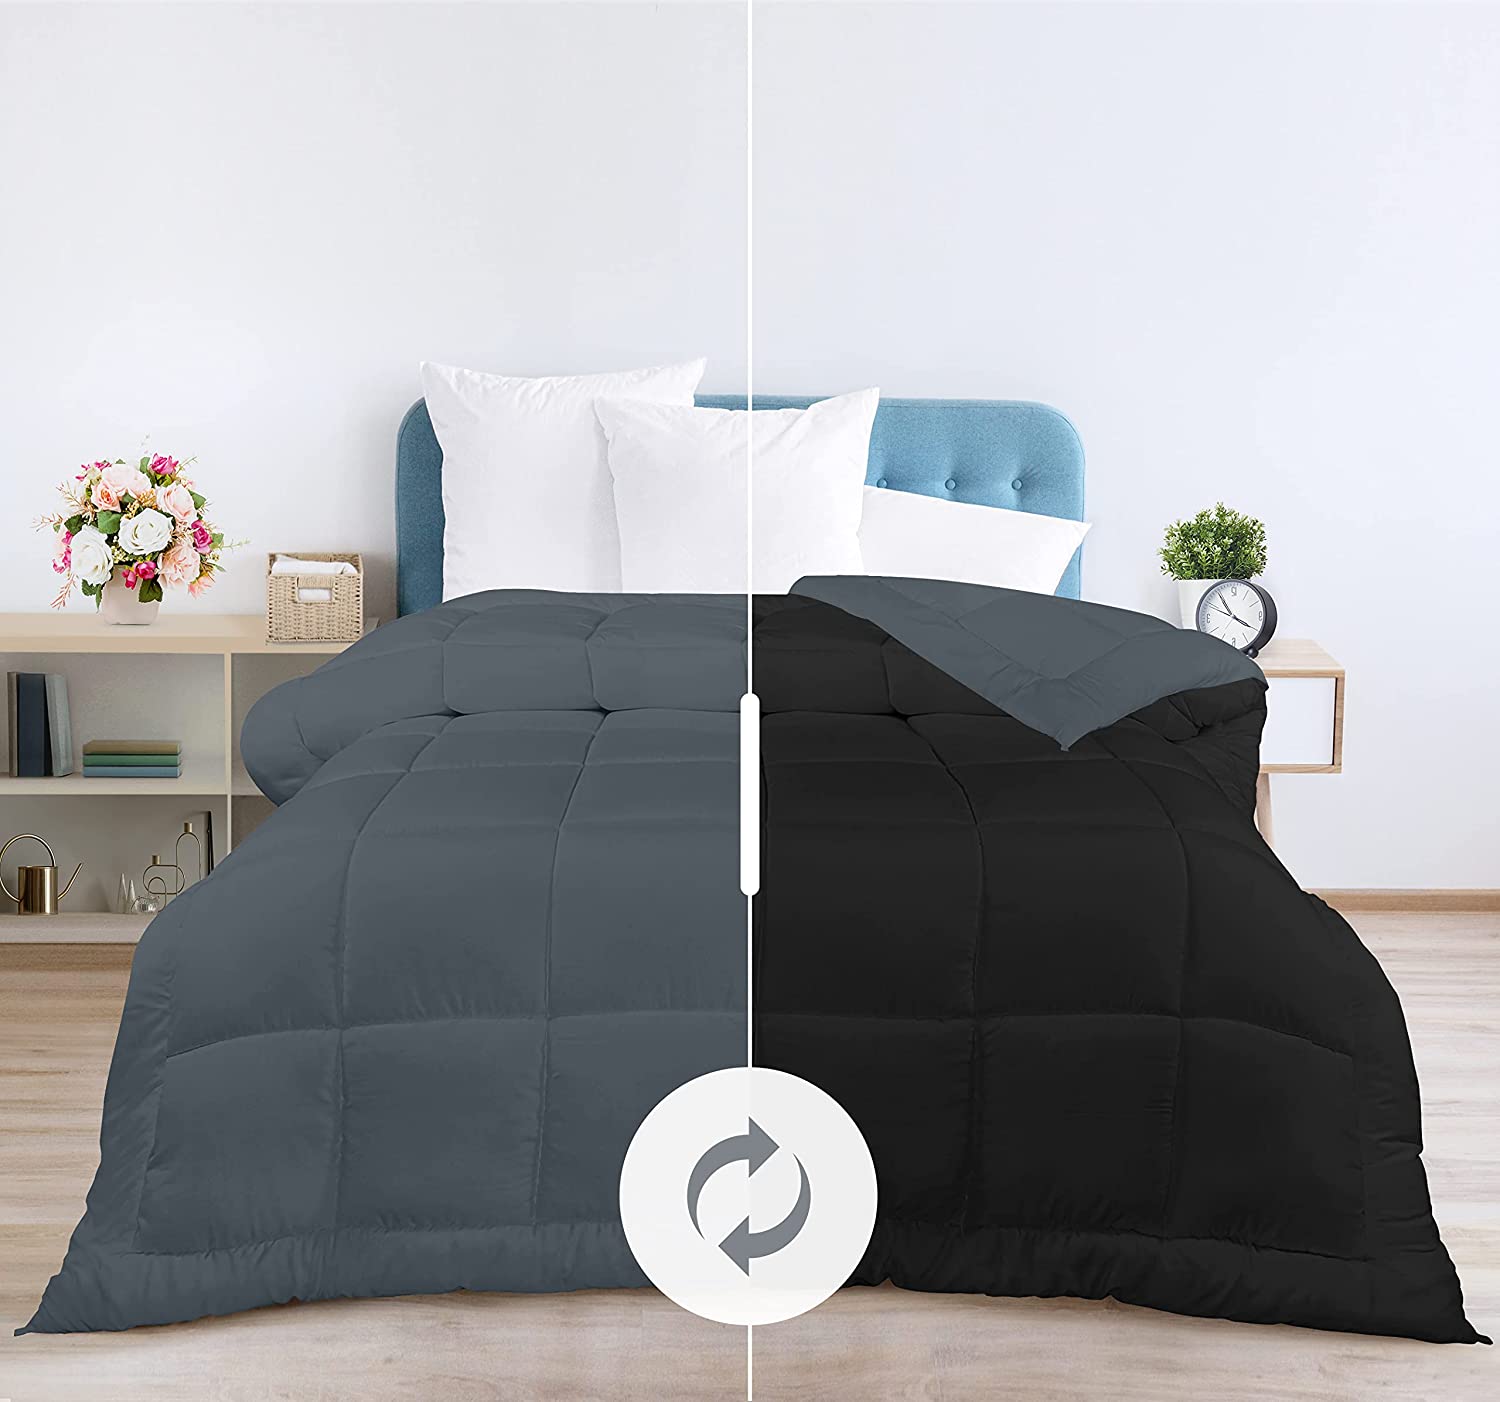 Utopia Bedding King/California King Size Comforter Set with 2 Pillow Shams  - Bedding Comforter Sets - Down Alternative White Comforter - Soft and